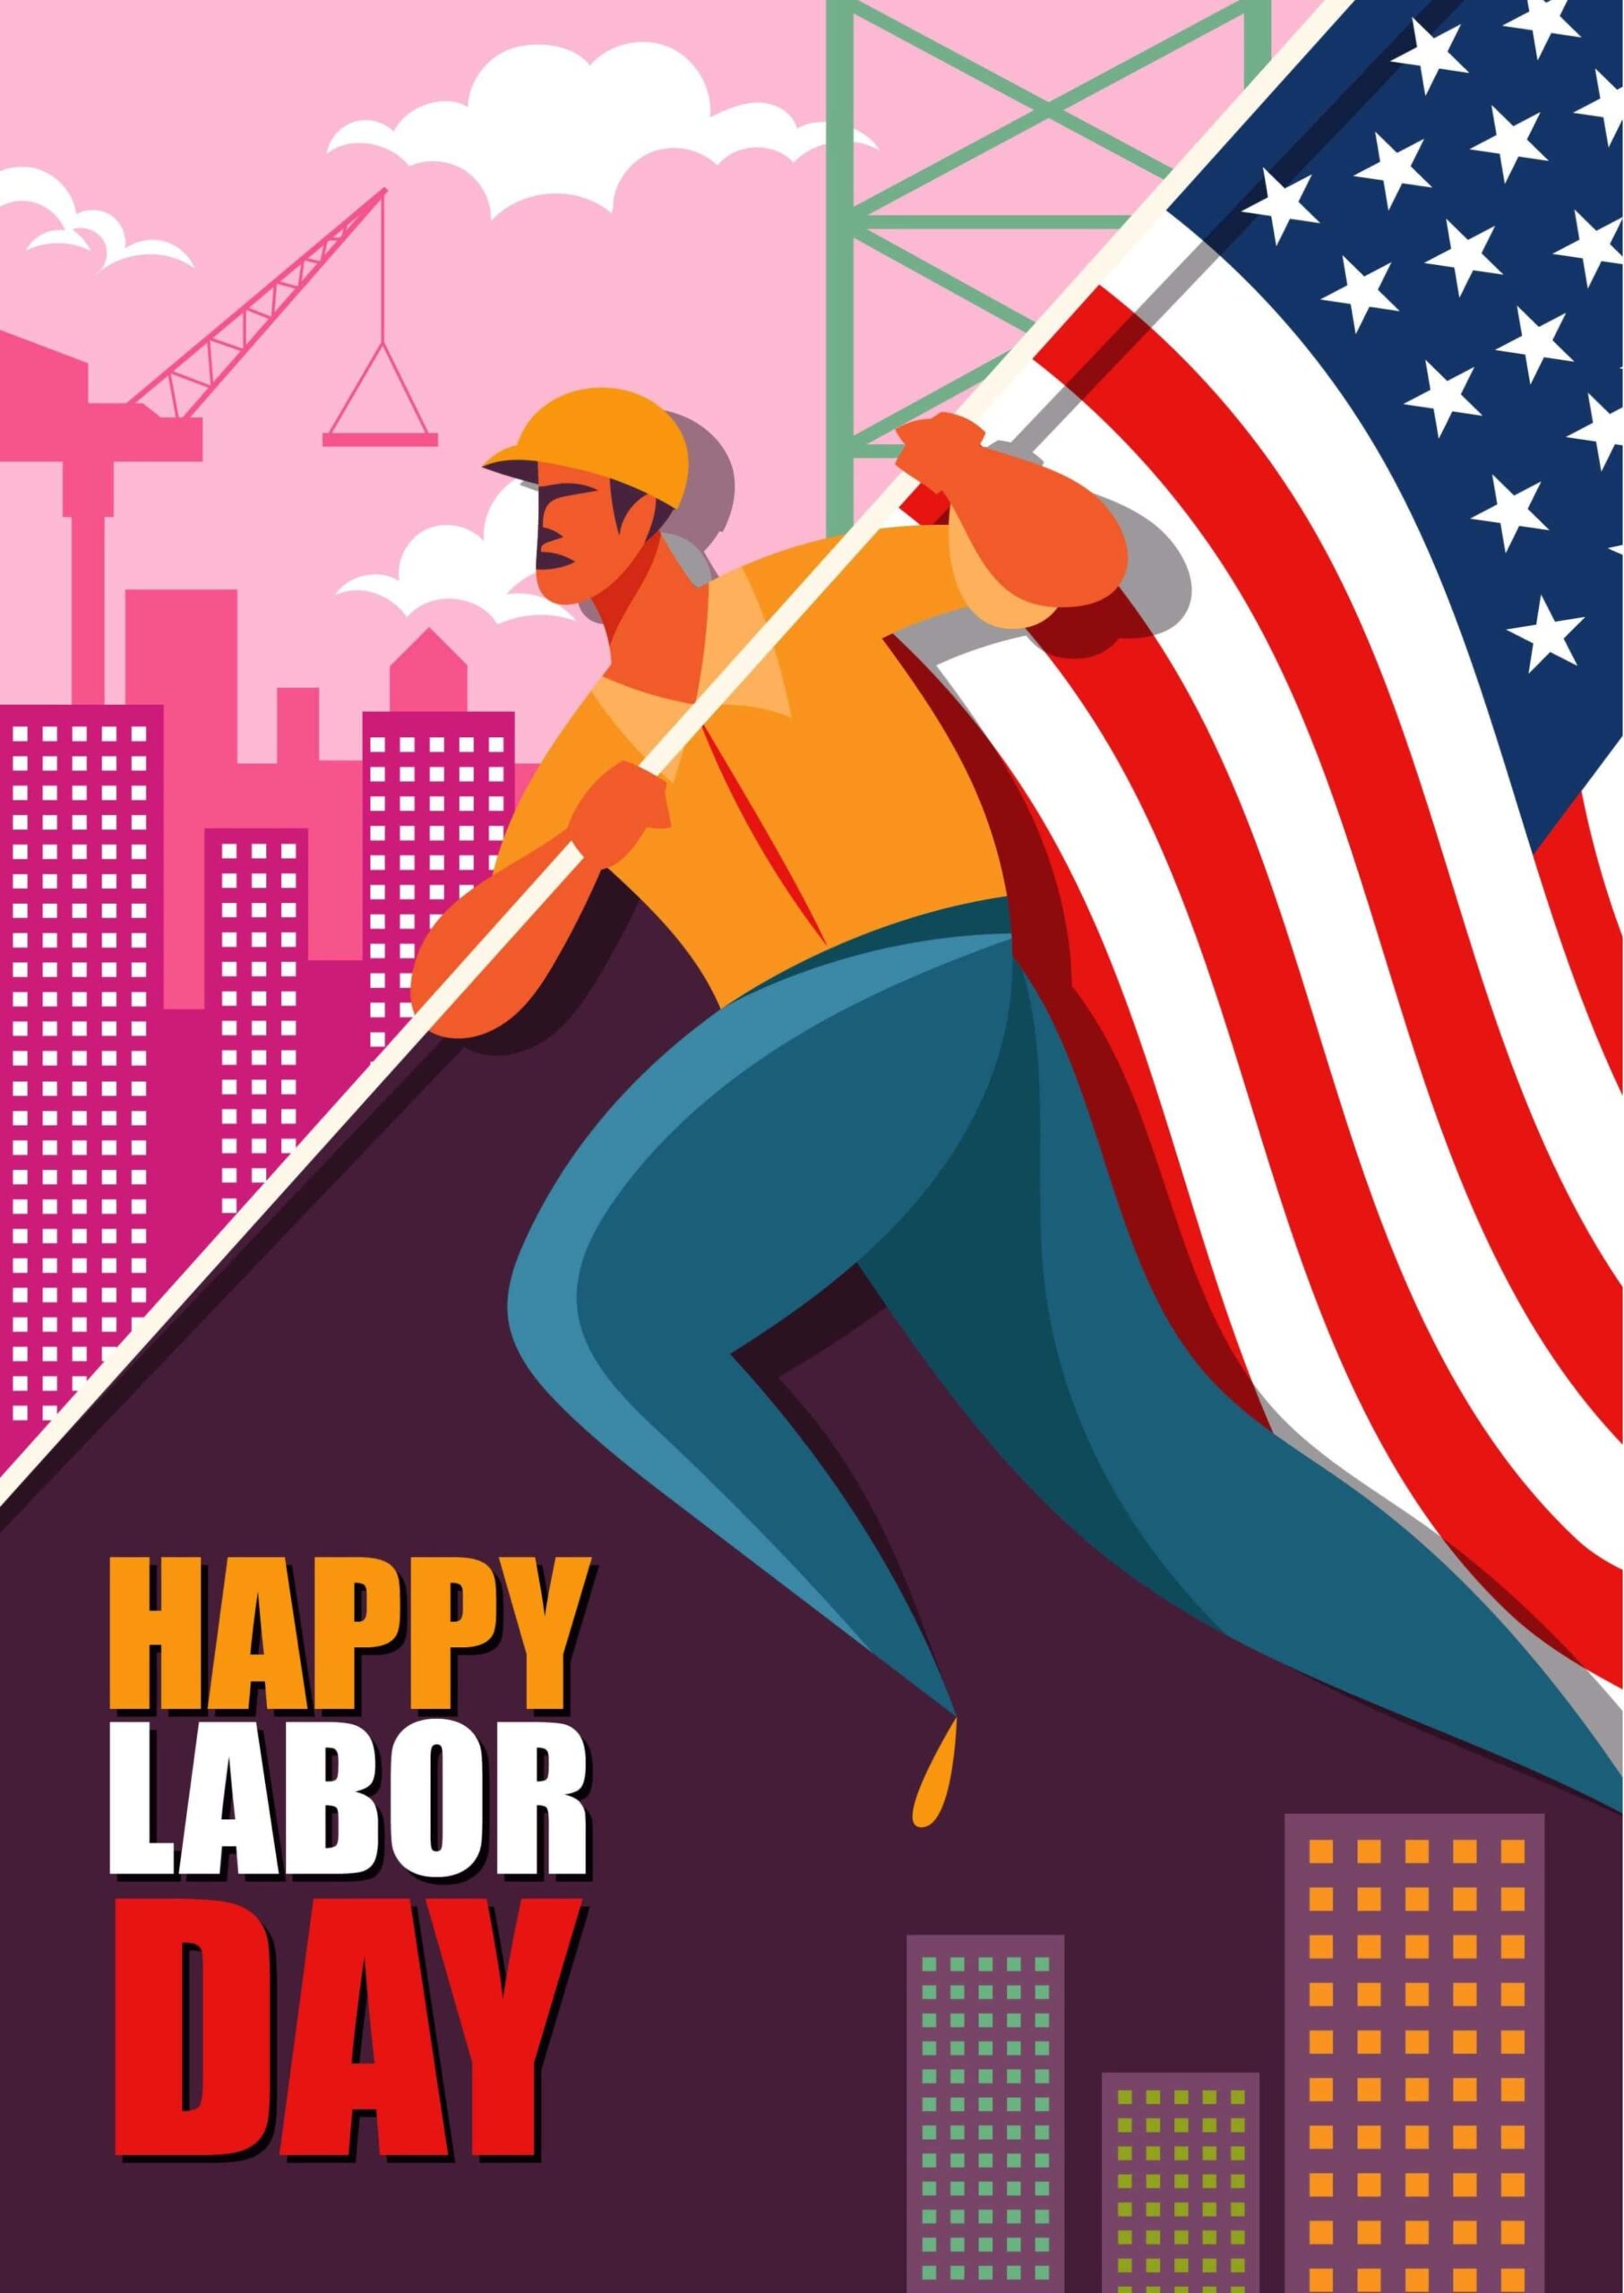 happy labor day image 